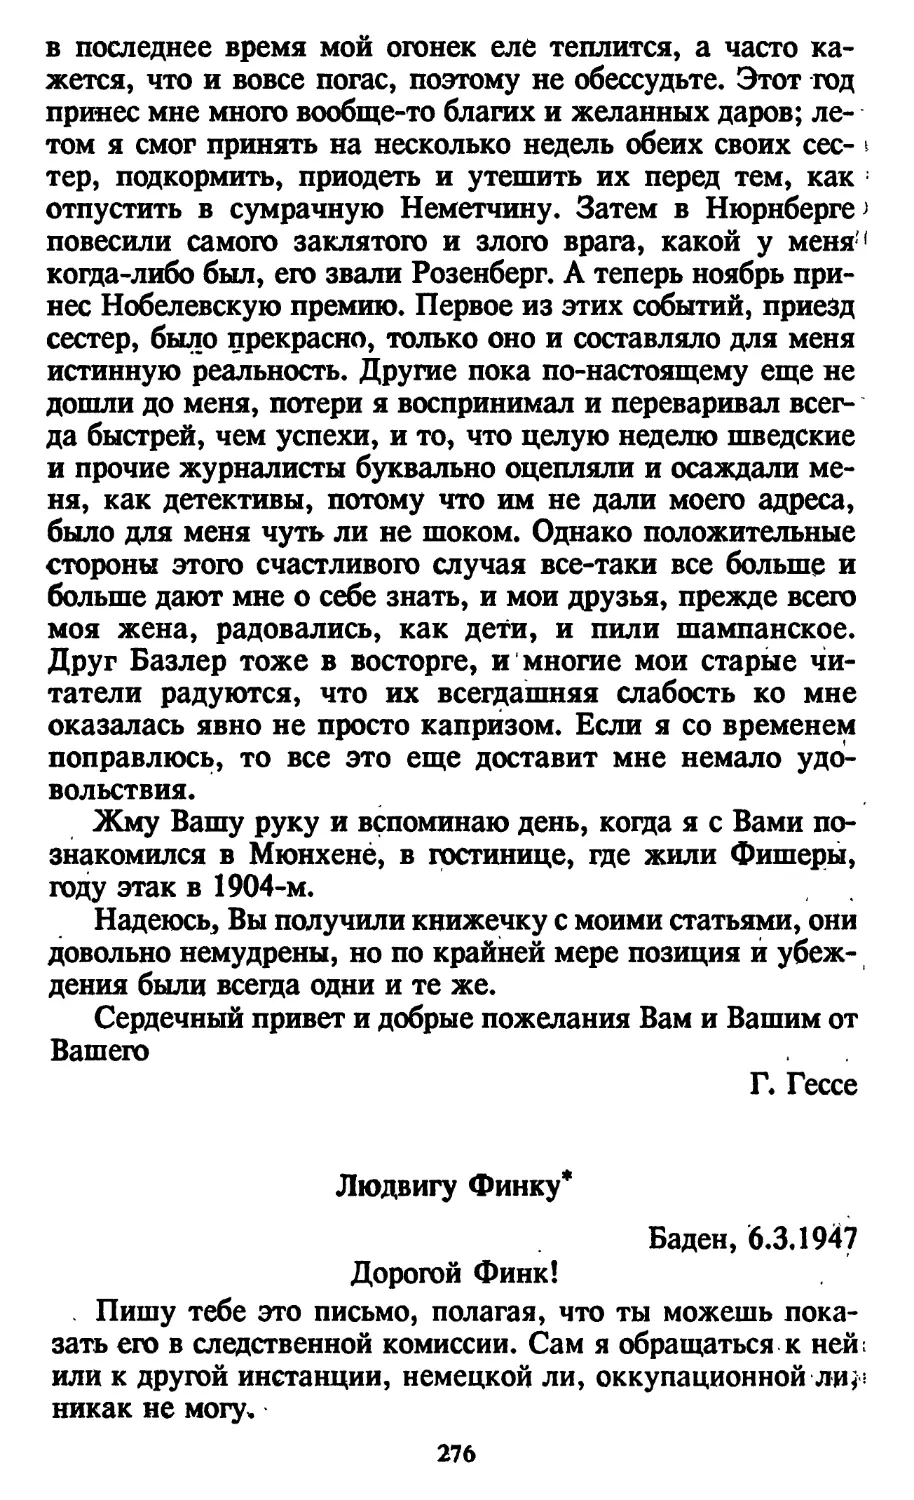 Людвигу Финку. 6.3.1947